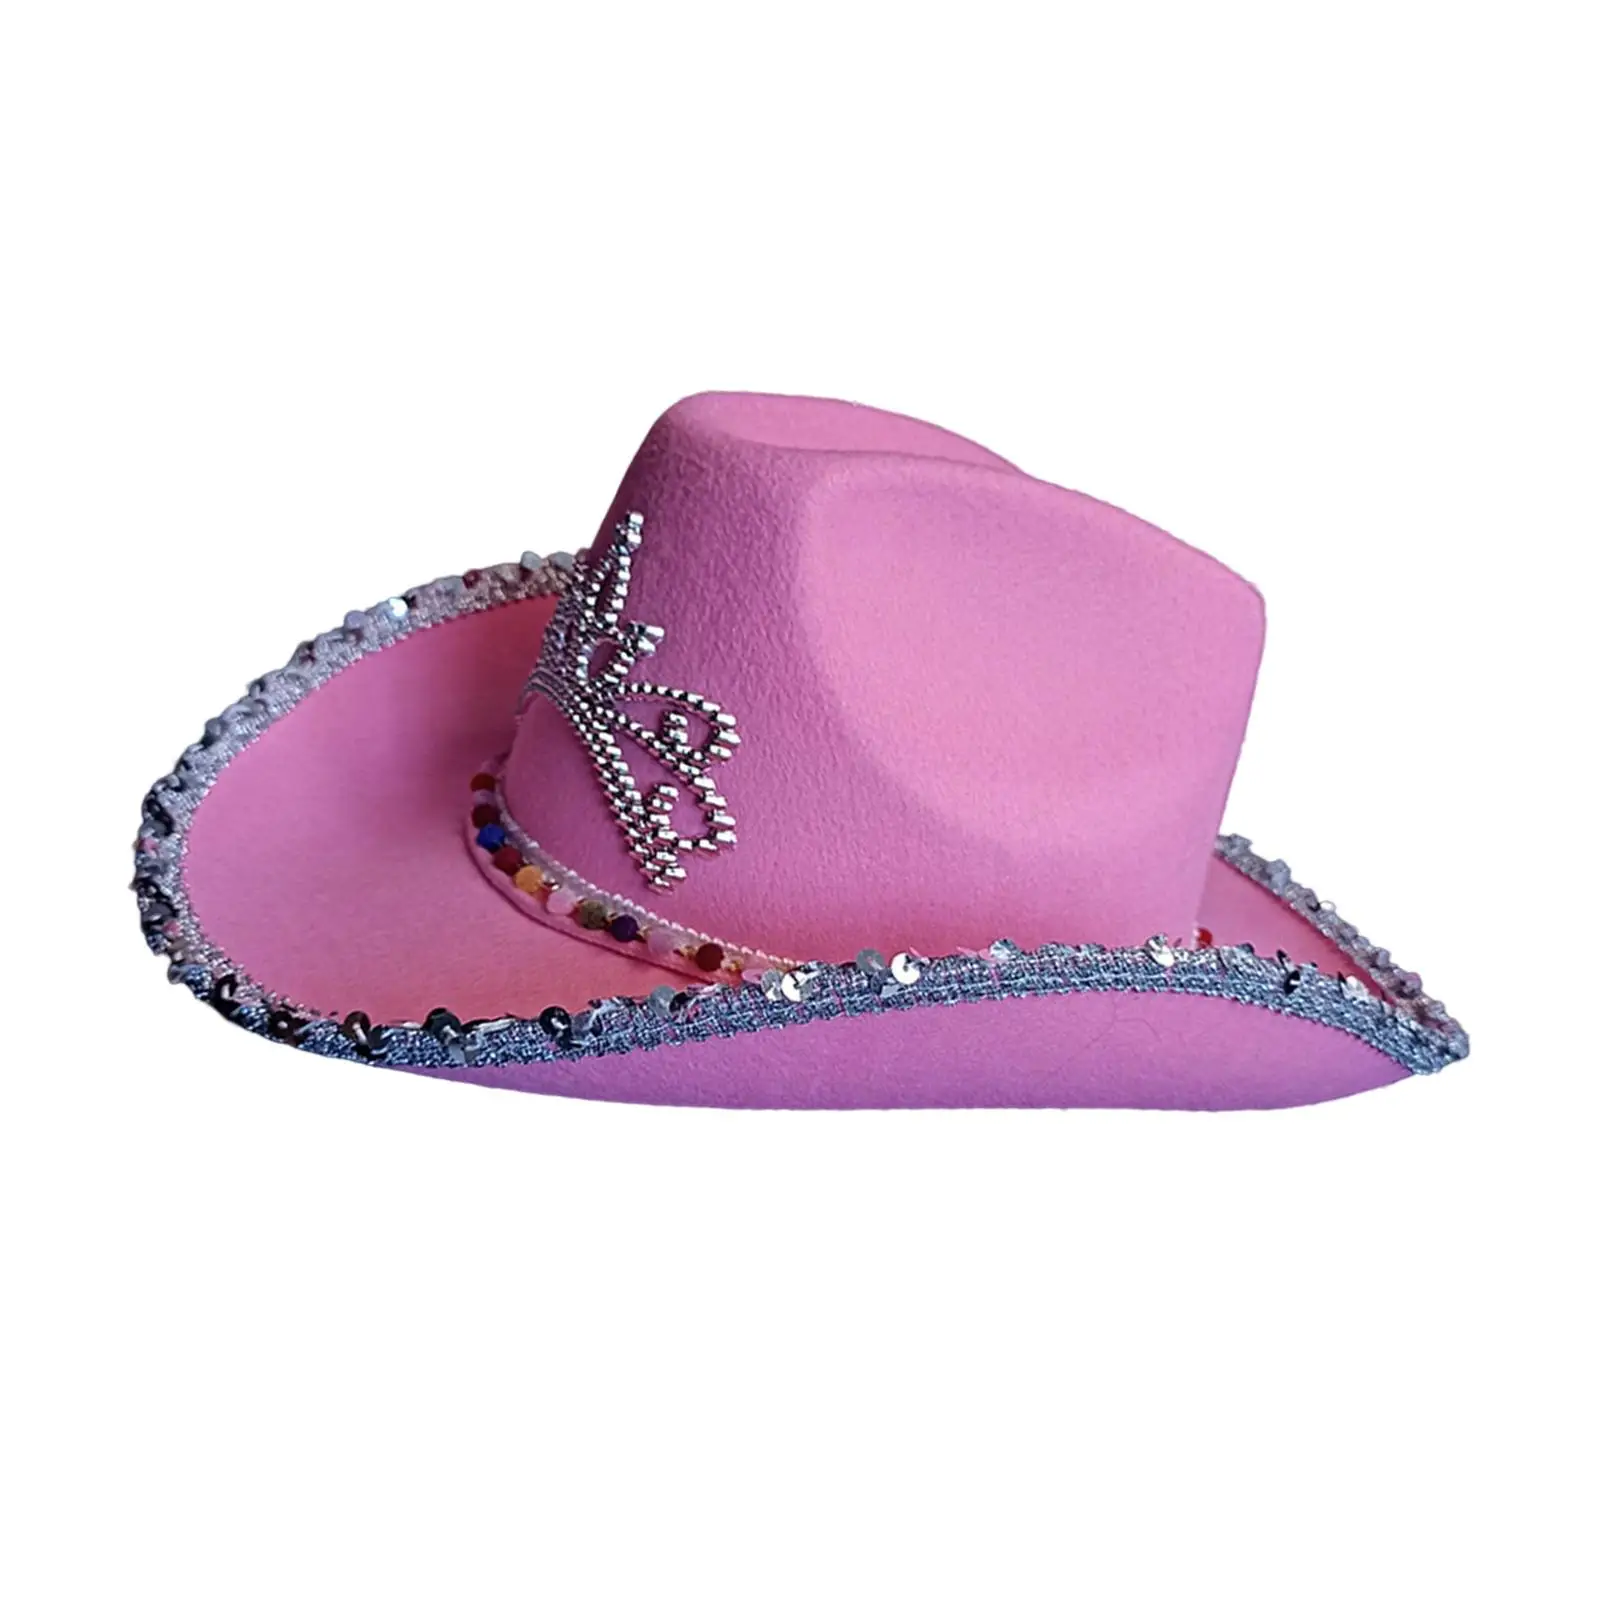 Wild West Cowgirl Hat with Tiara Pom Pom Balls Decorative Wide Brim Cowboy Hat for Play Girls Ladies Adult Teens Dress up